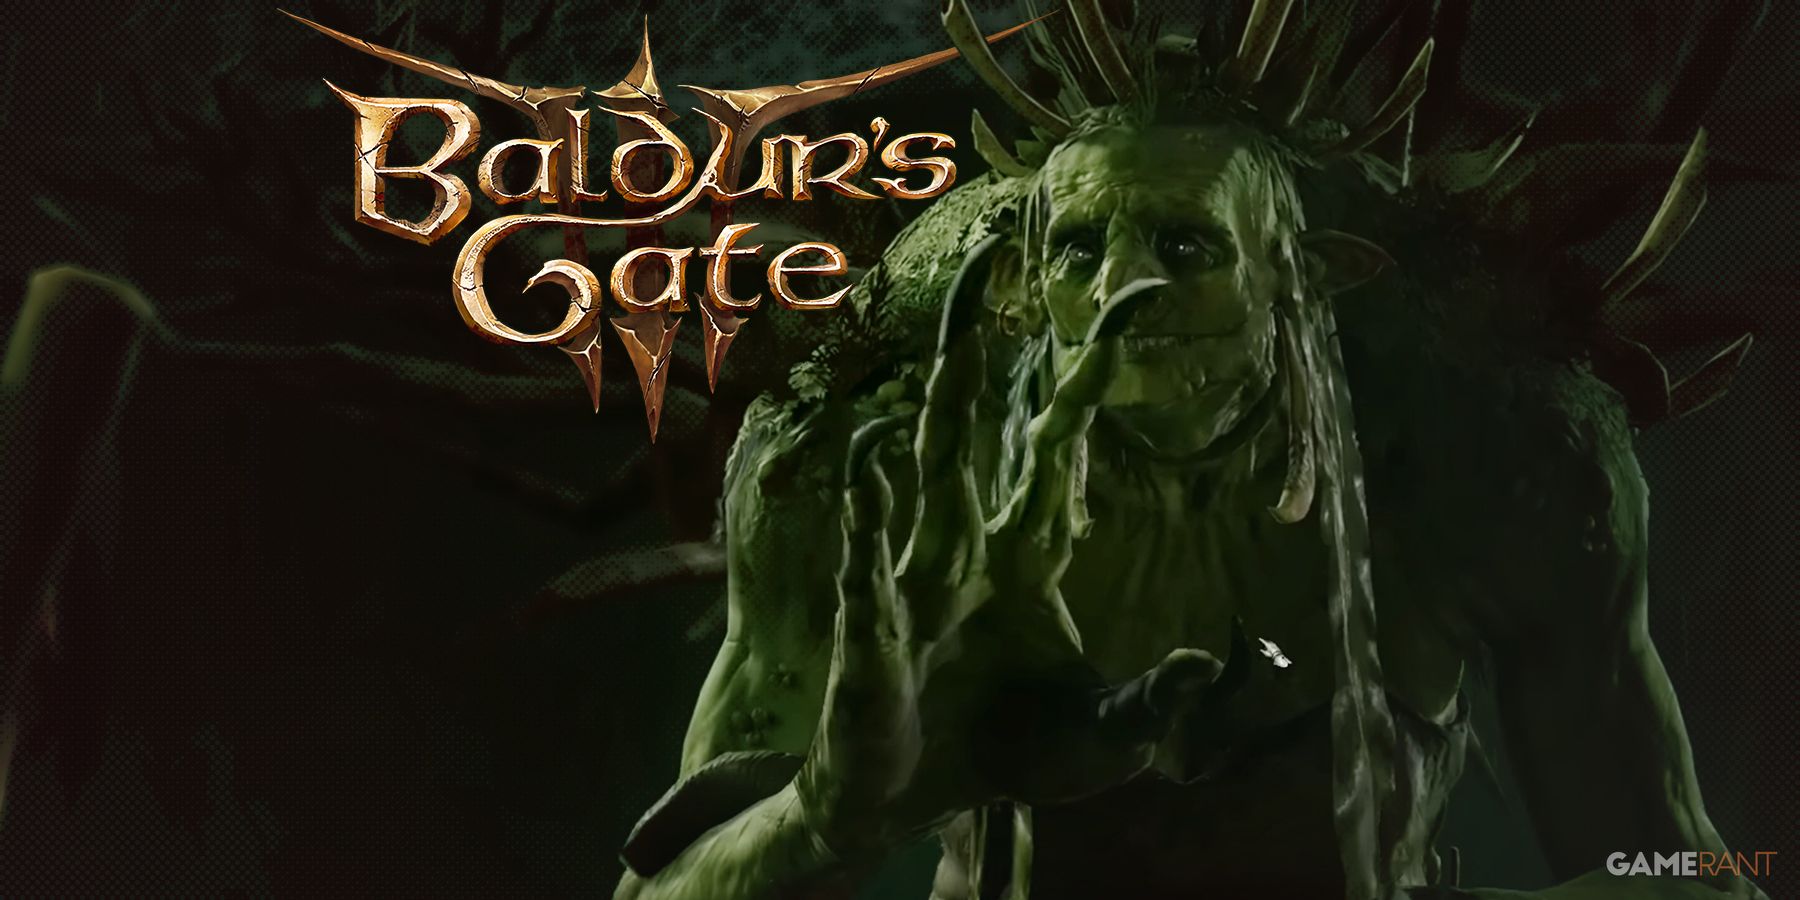 Baldur's Gate 3 hag next to game logo dot halftone effect edit